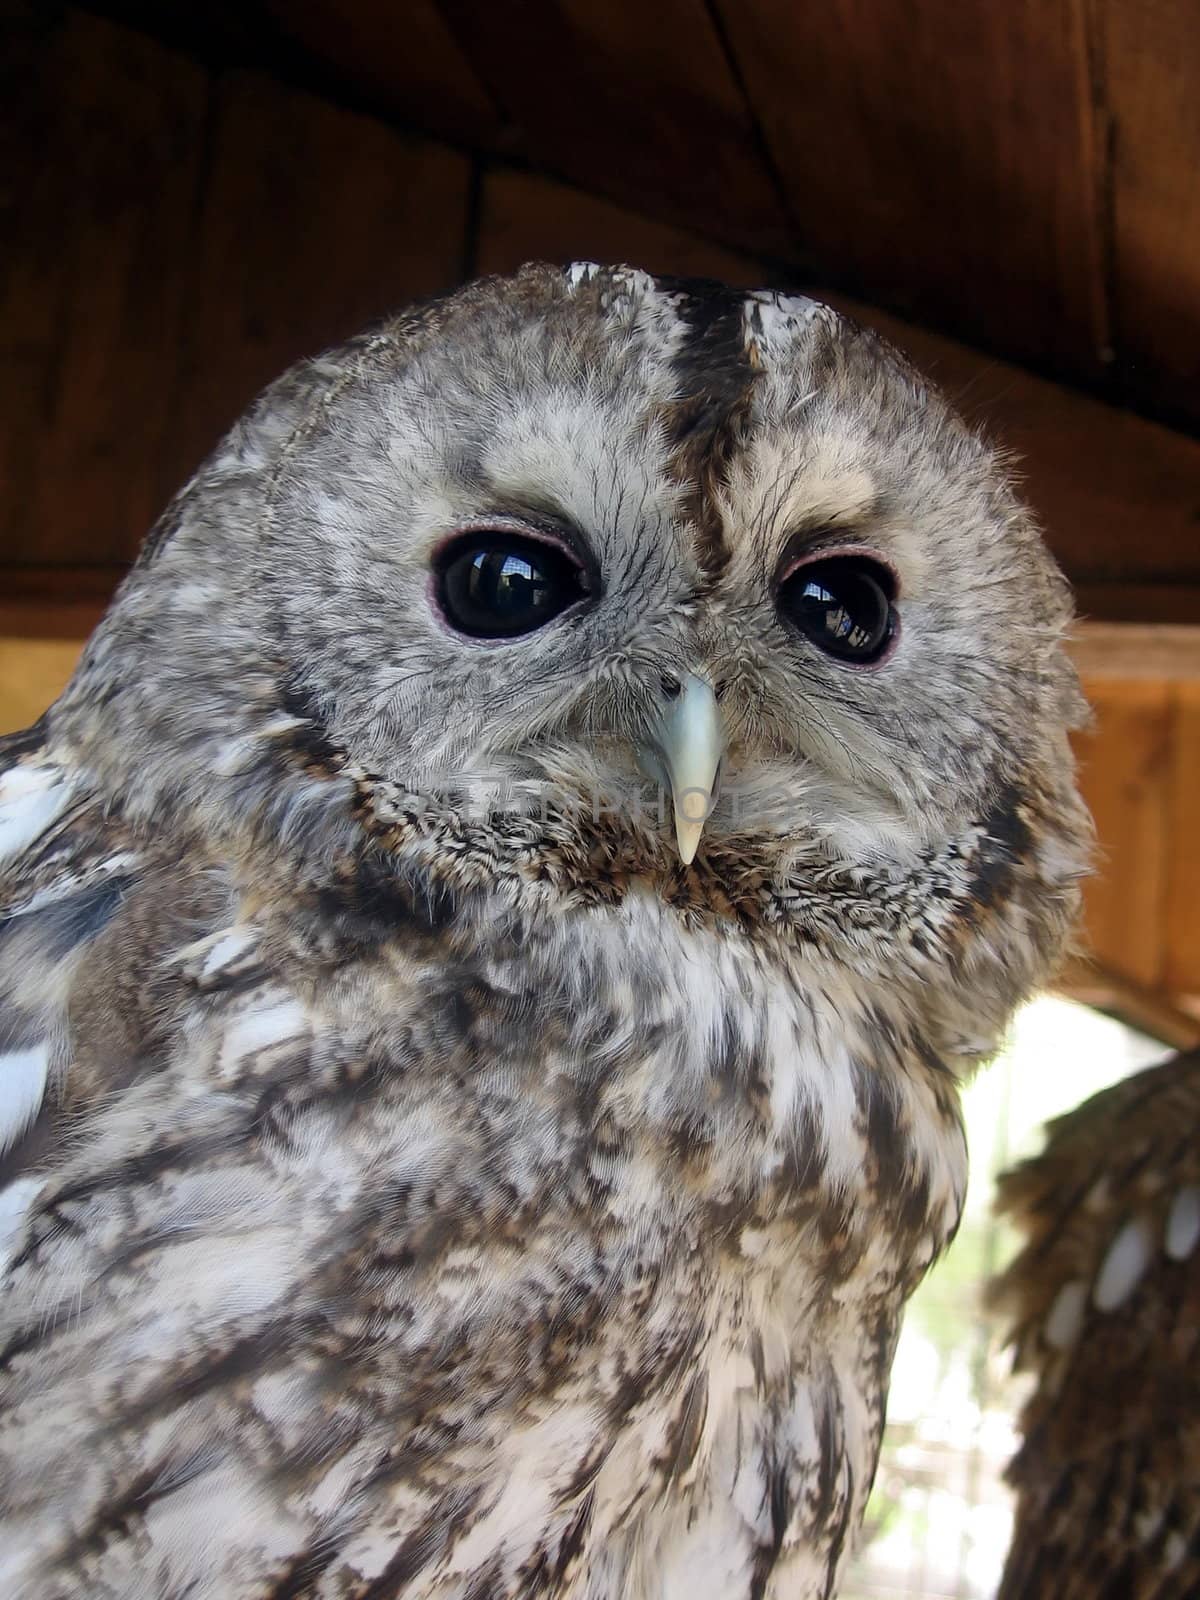 Single nice owl with big black eyes